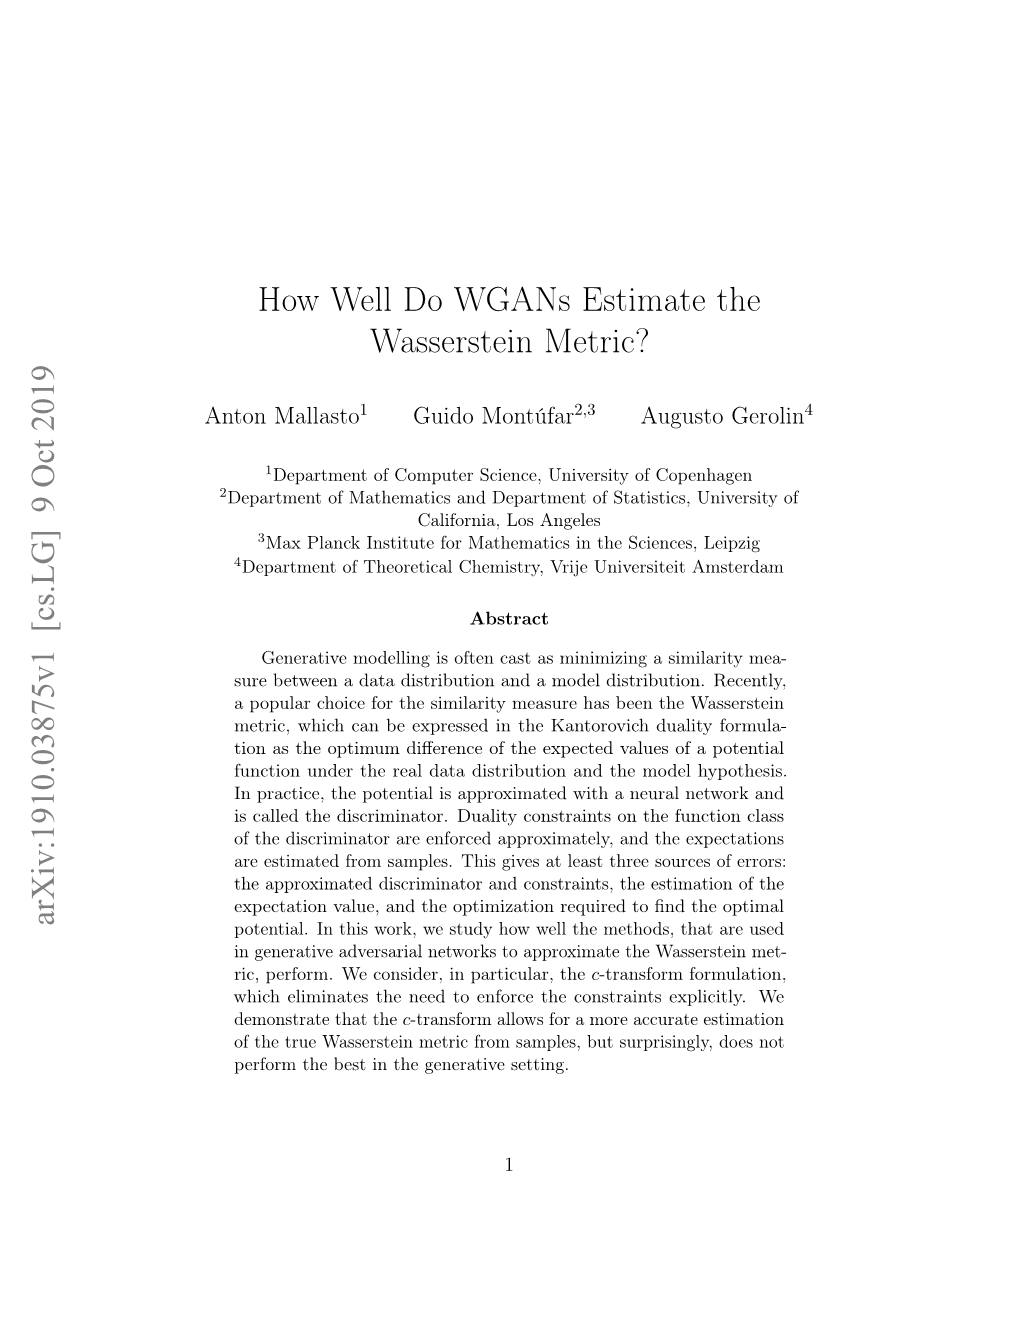 How Well Do Wgans Estimate the Wasserstein Metric? Arxiv